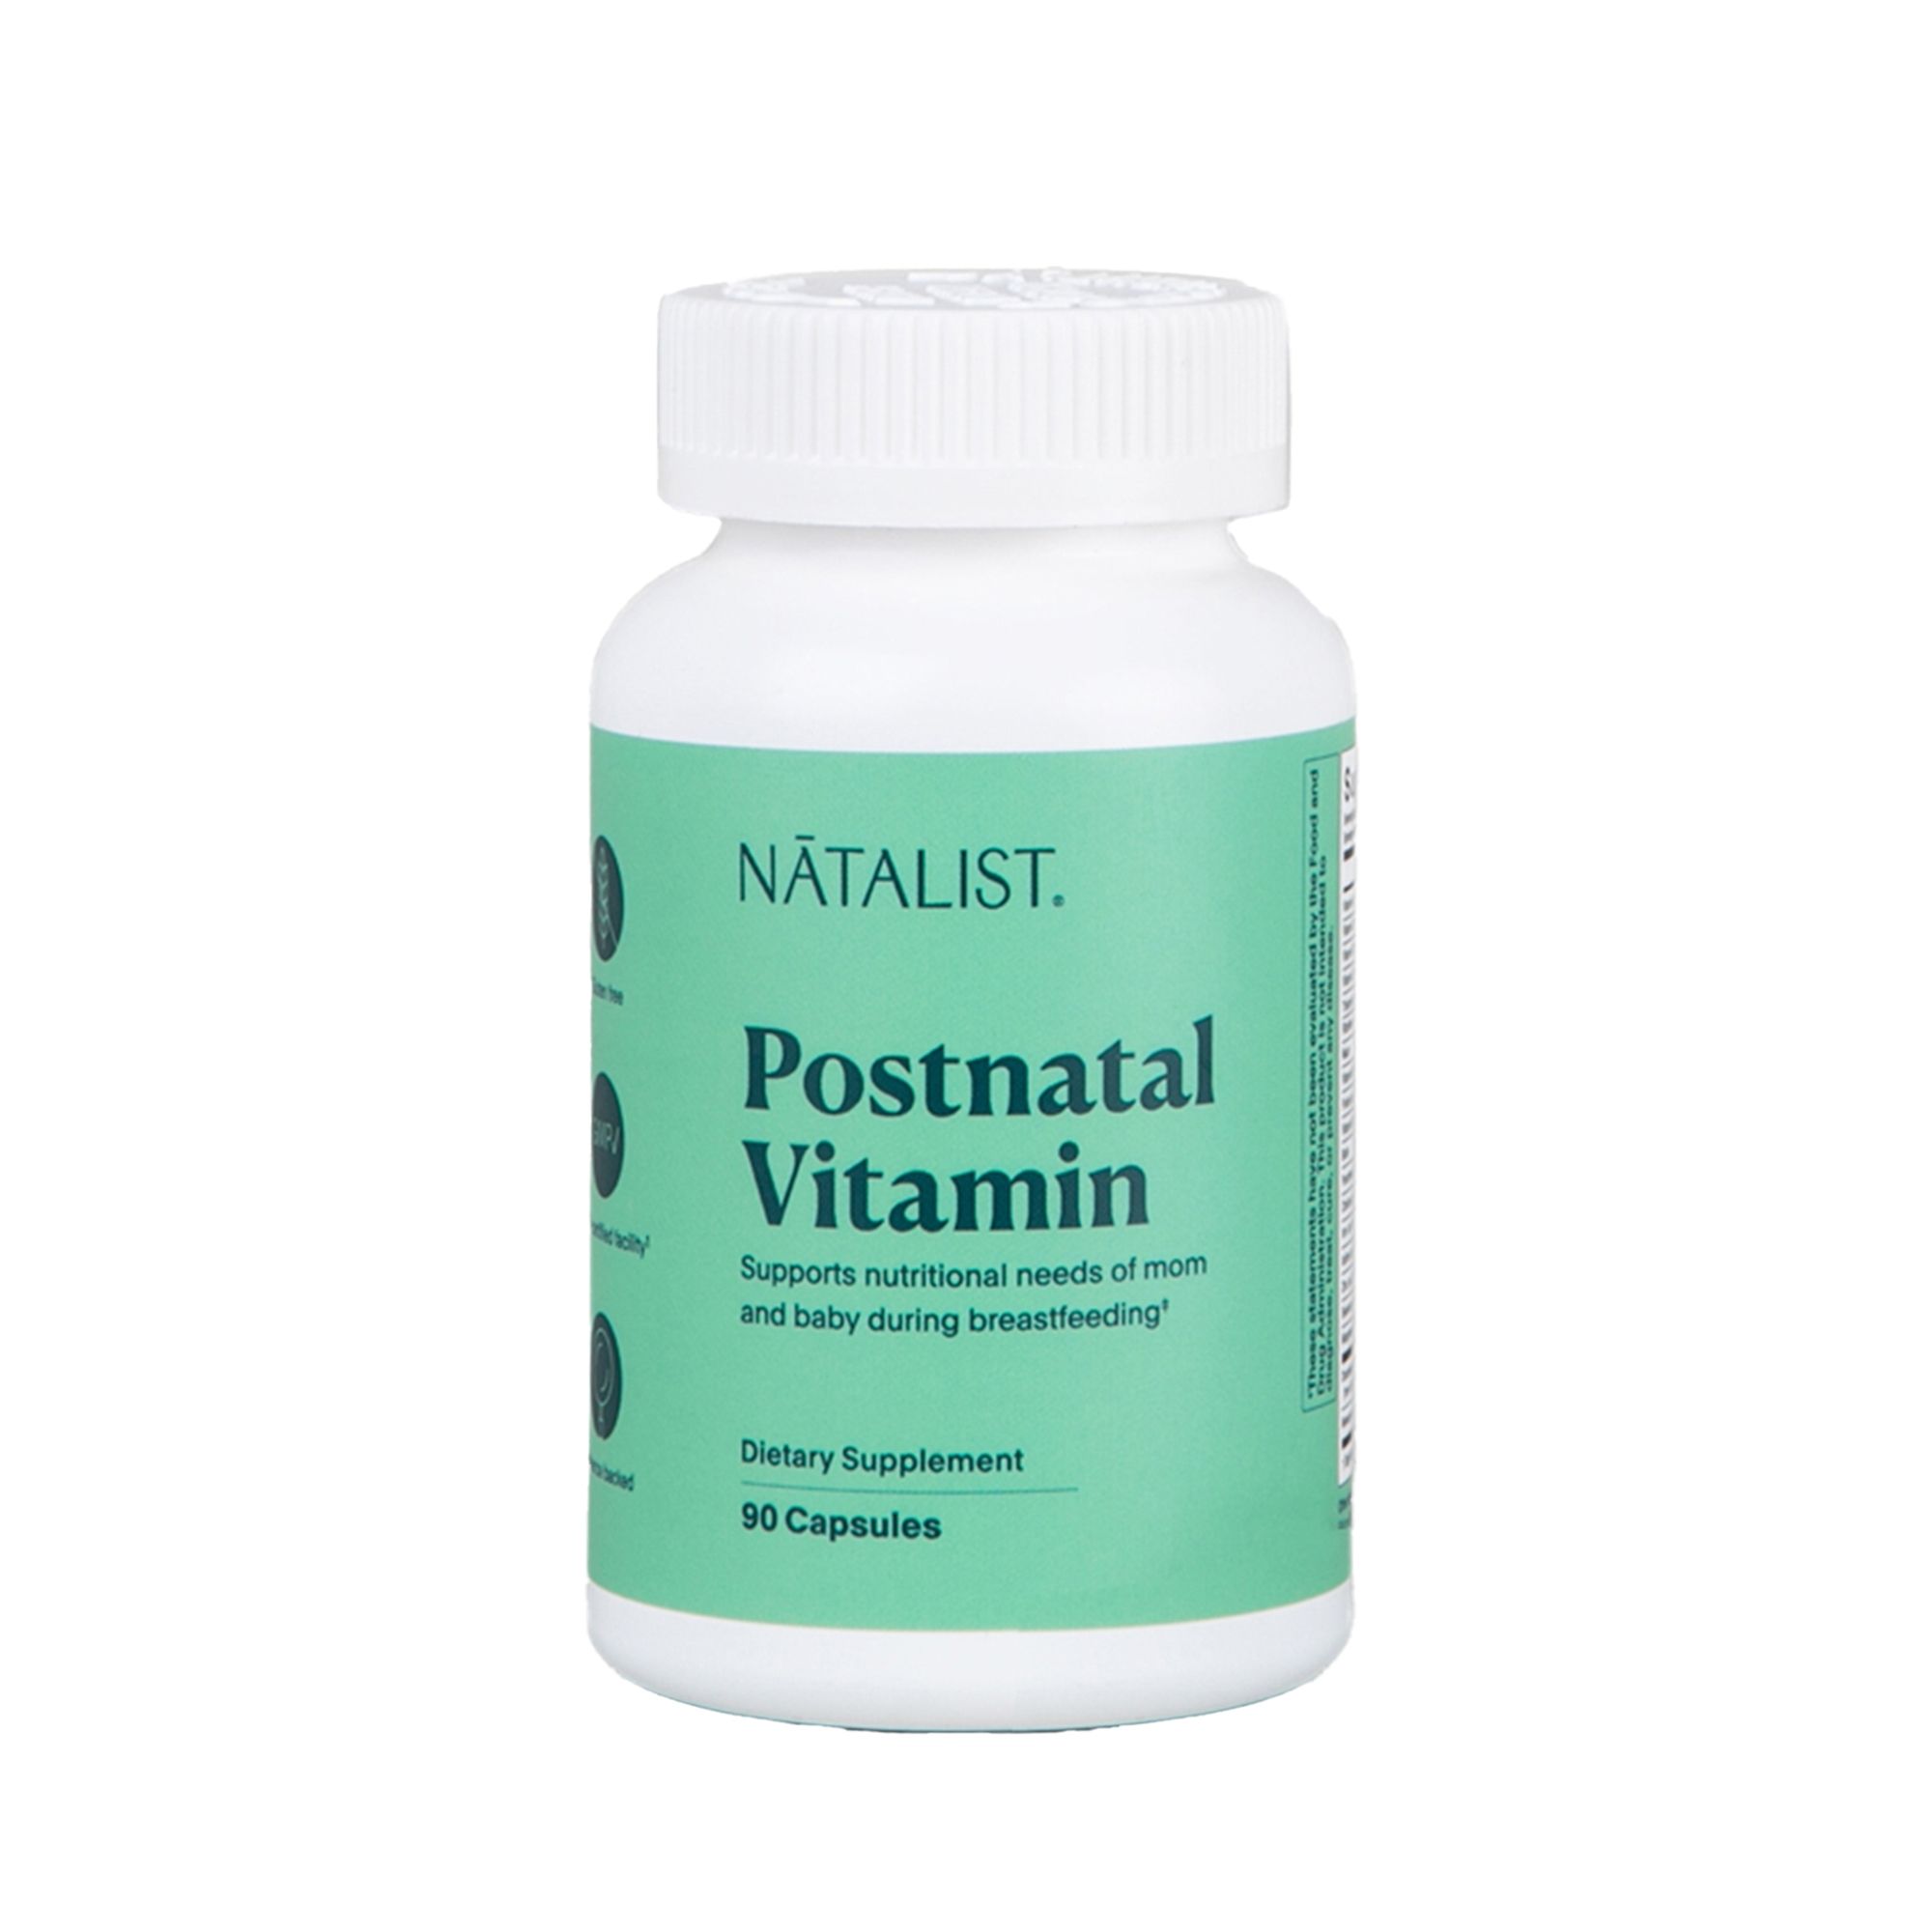 Natalist Postnatal Vitamin Capsules - 90 ct